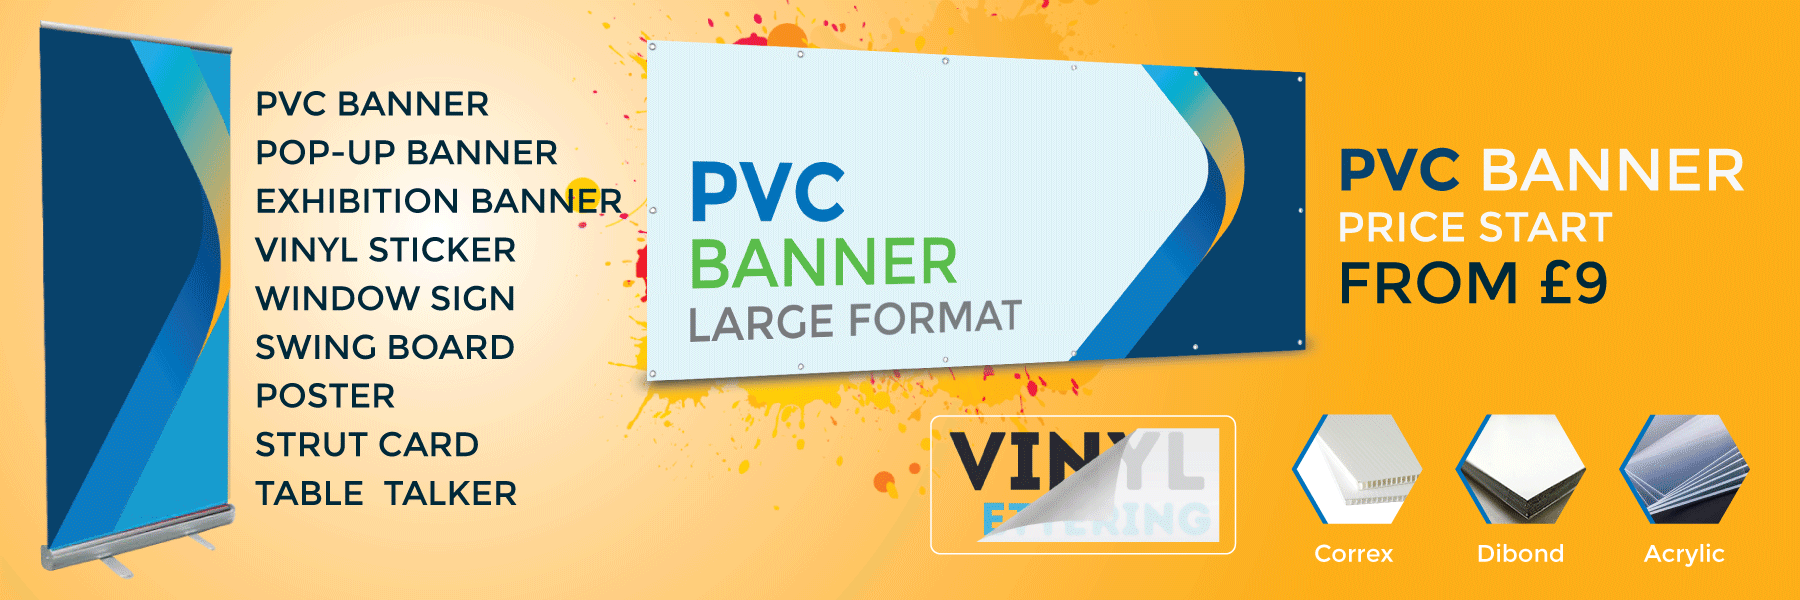 instant print pvc banner large format vinyl cut sticker advertising materials printing shop in london